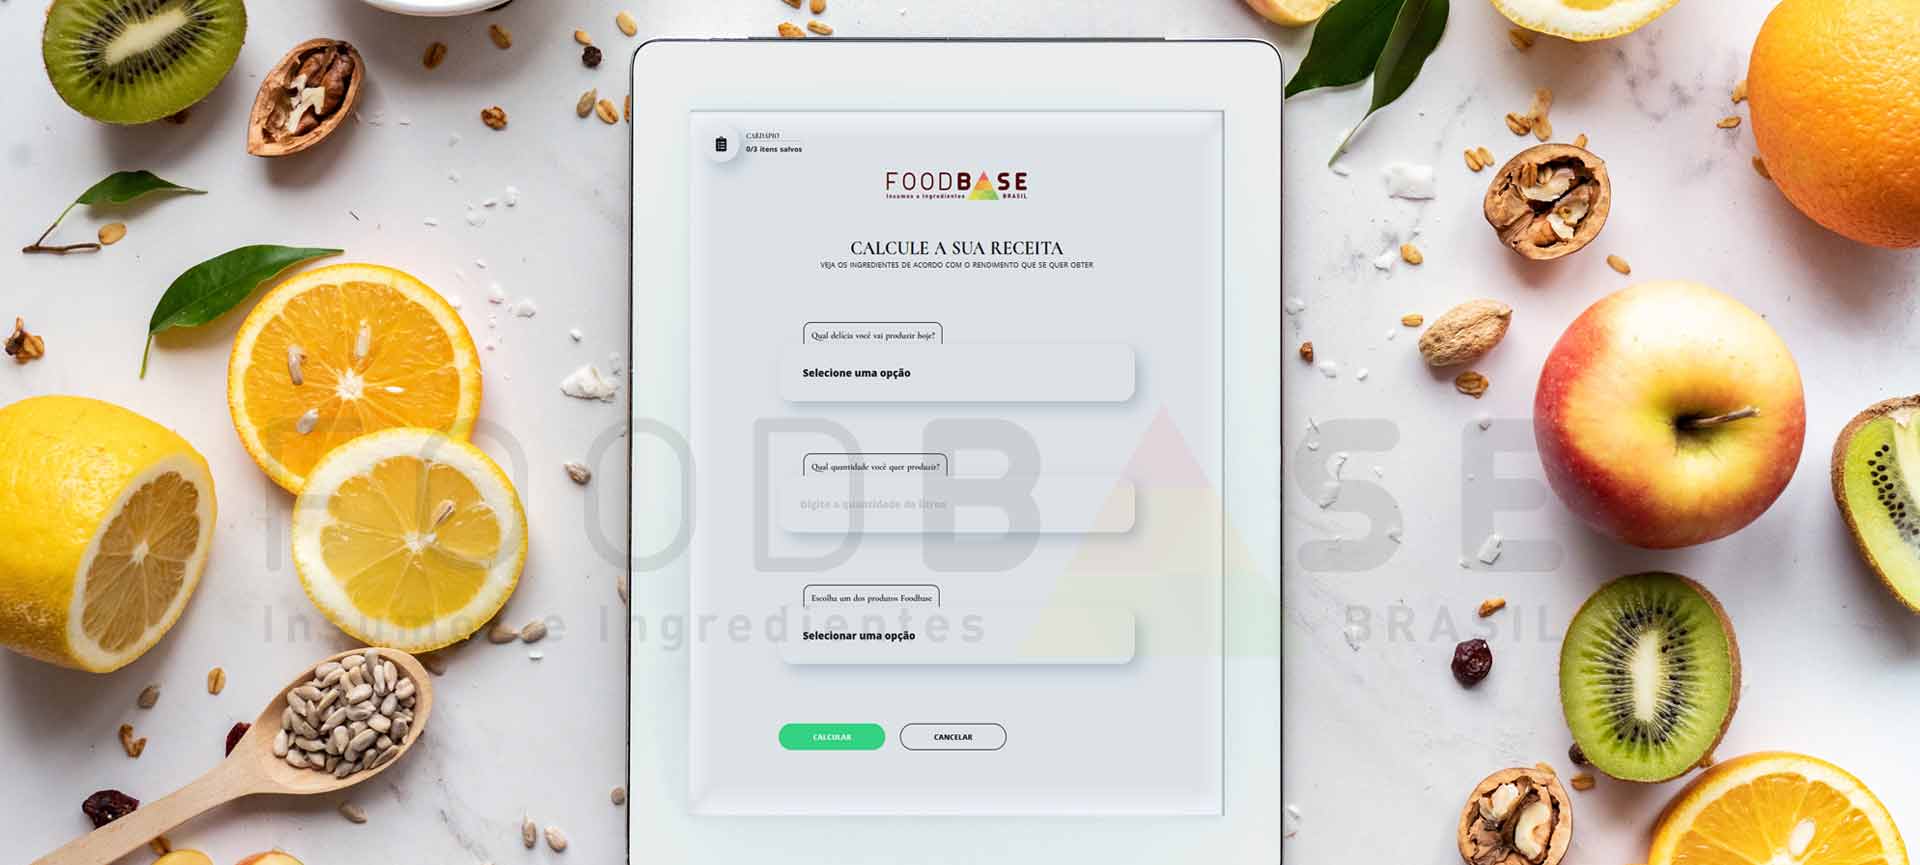 Foodbase - Calcule a sua receita com os produtos Foodbase